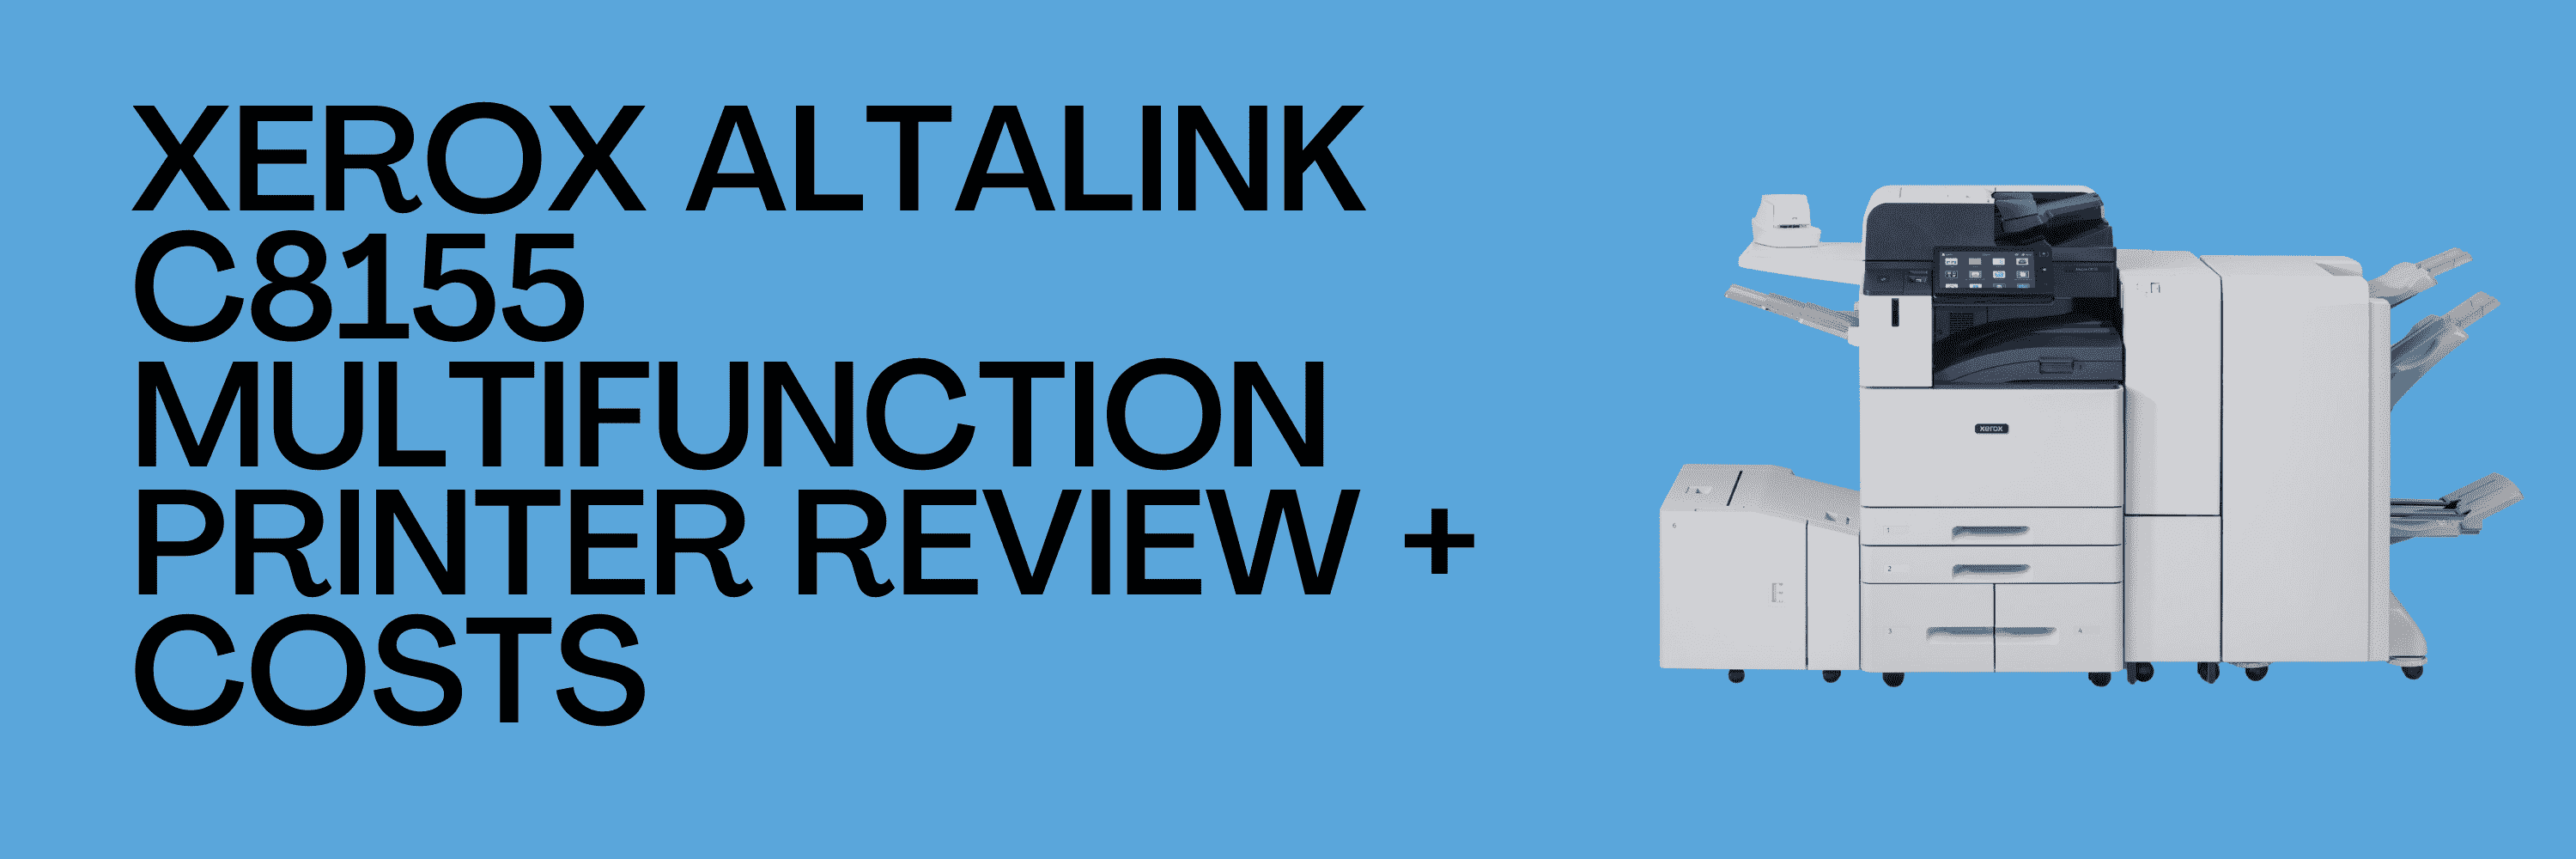 Xerox AltaLink C8155 Multifunction Printer Review